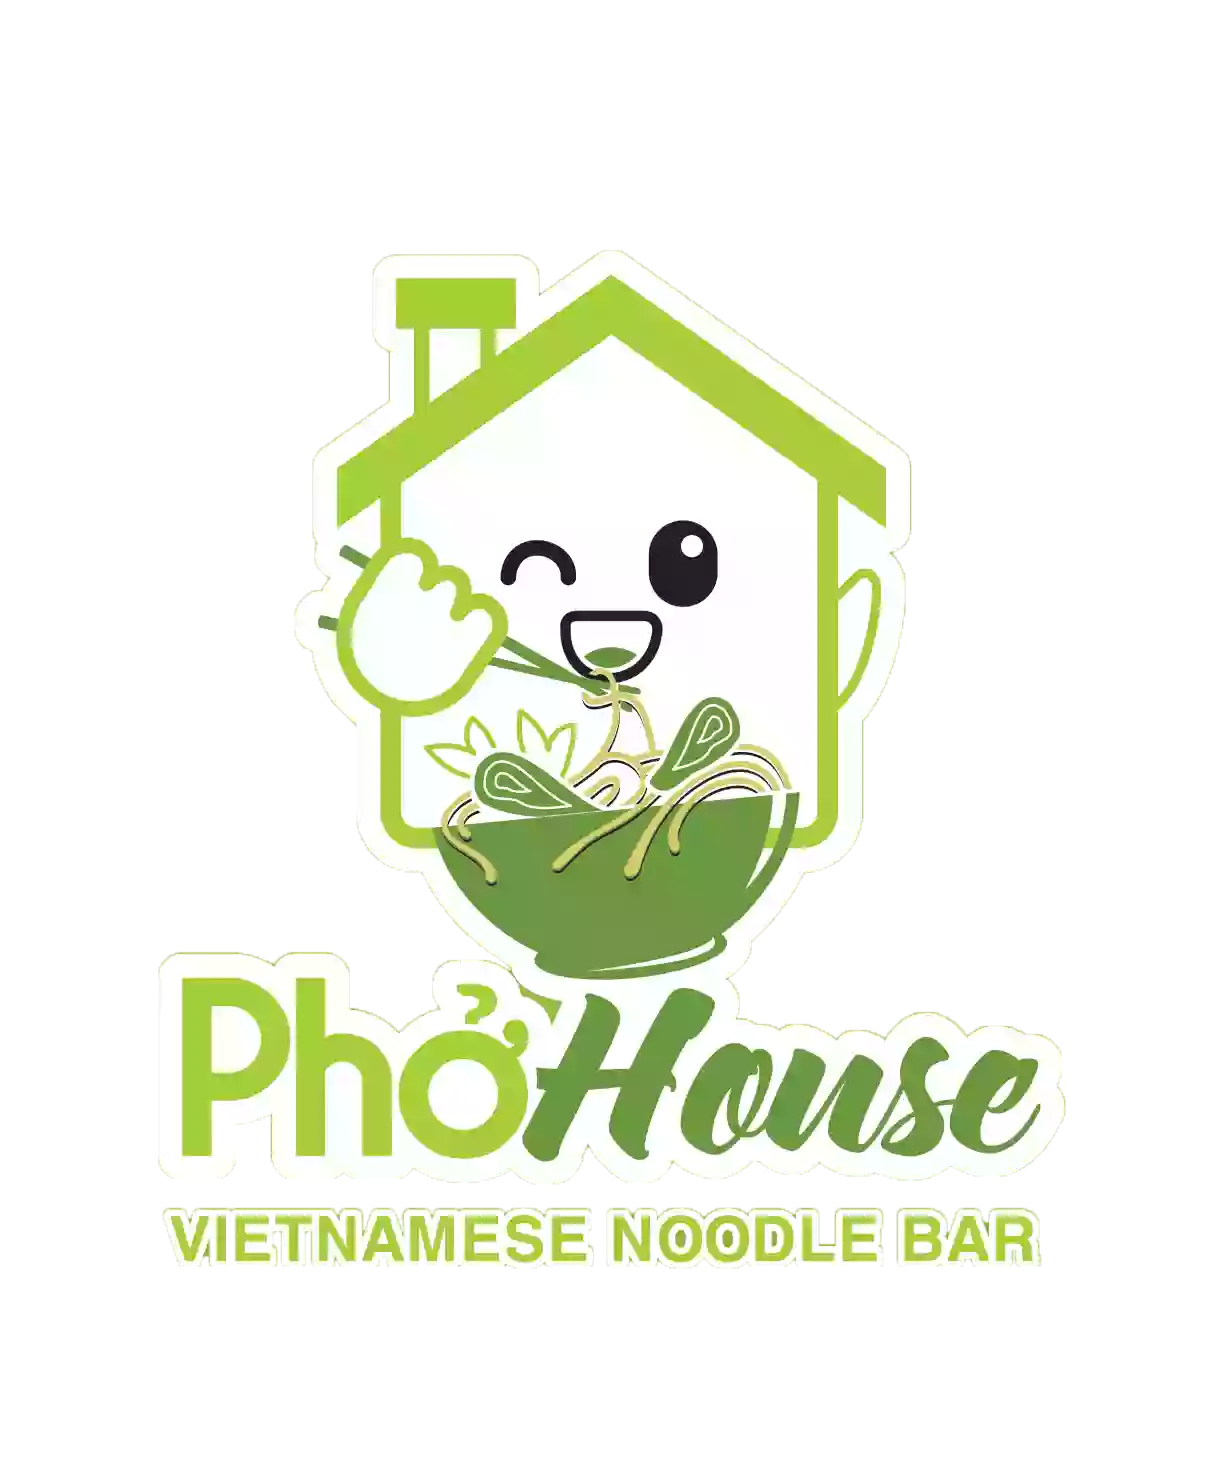 Pho House Vietnamese Noodle Bar